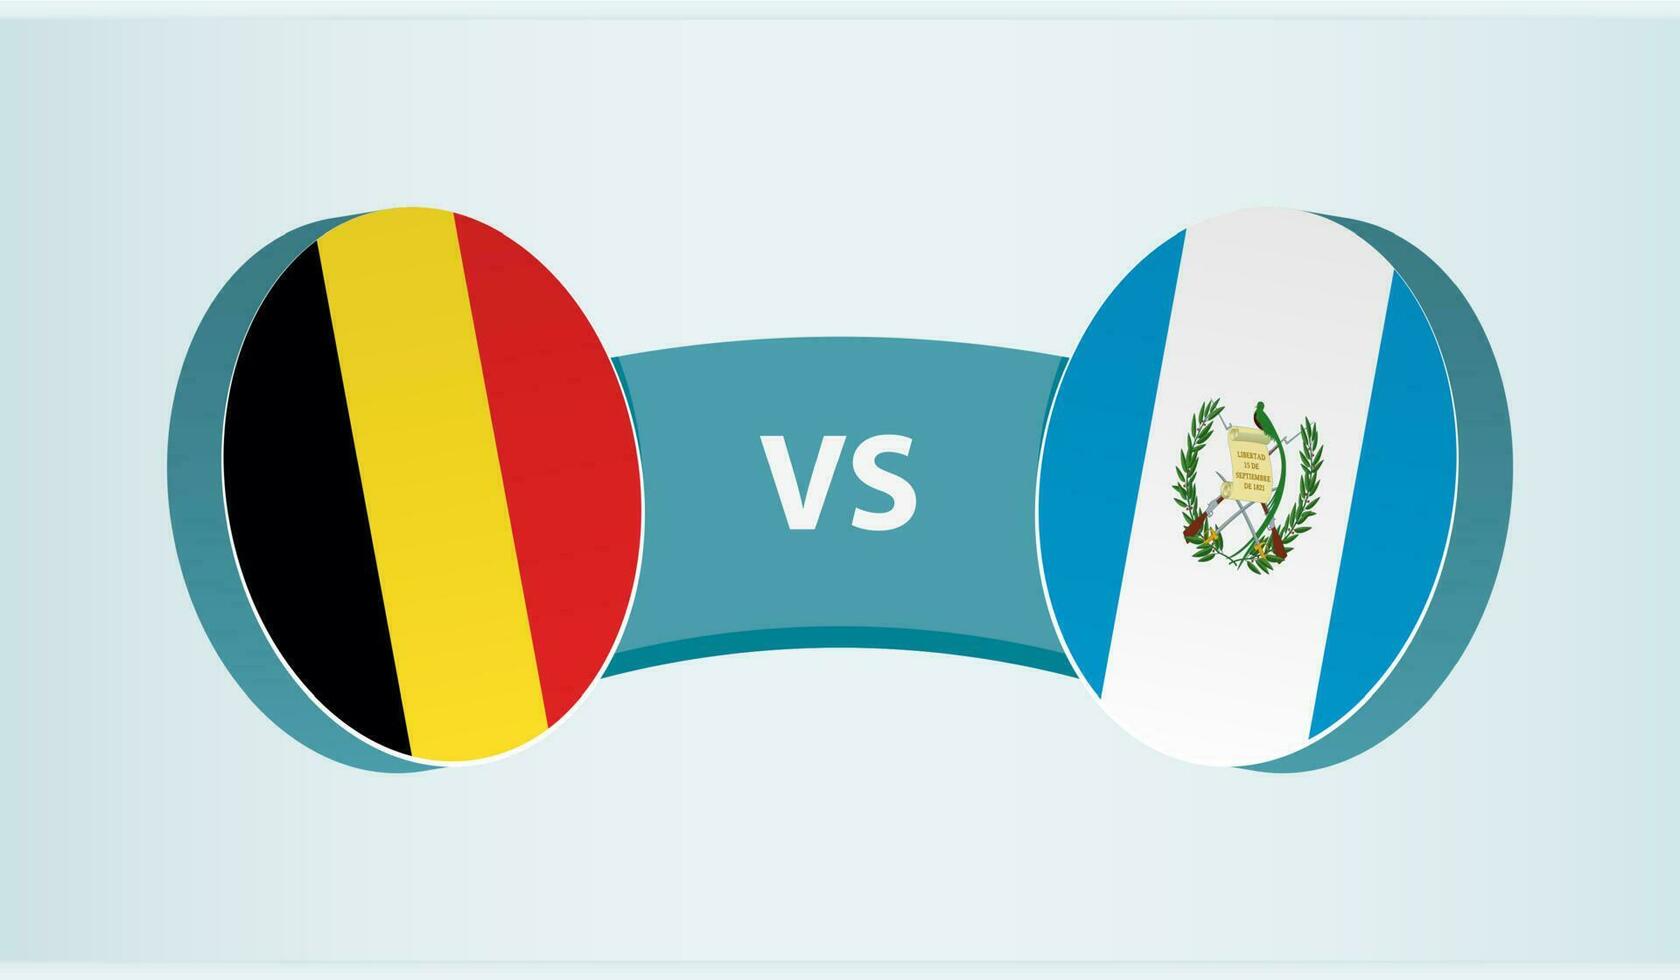 Belgien gegen Guatemala, Mannschaft Sport Wettbewerb Konzept. vektor